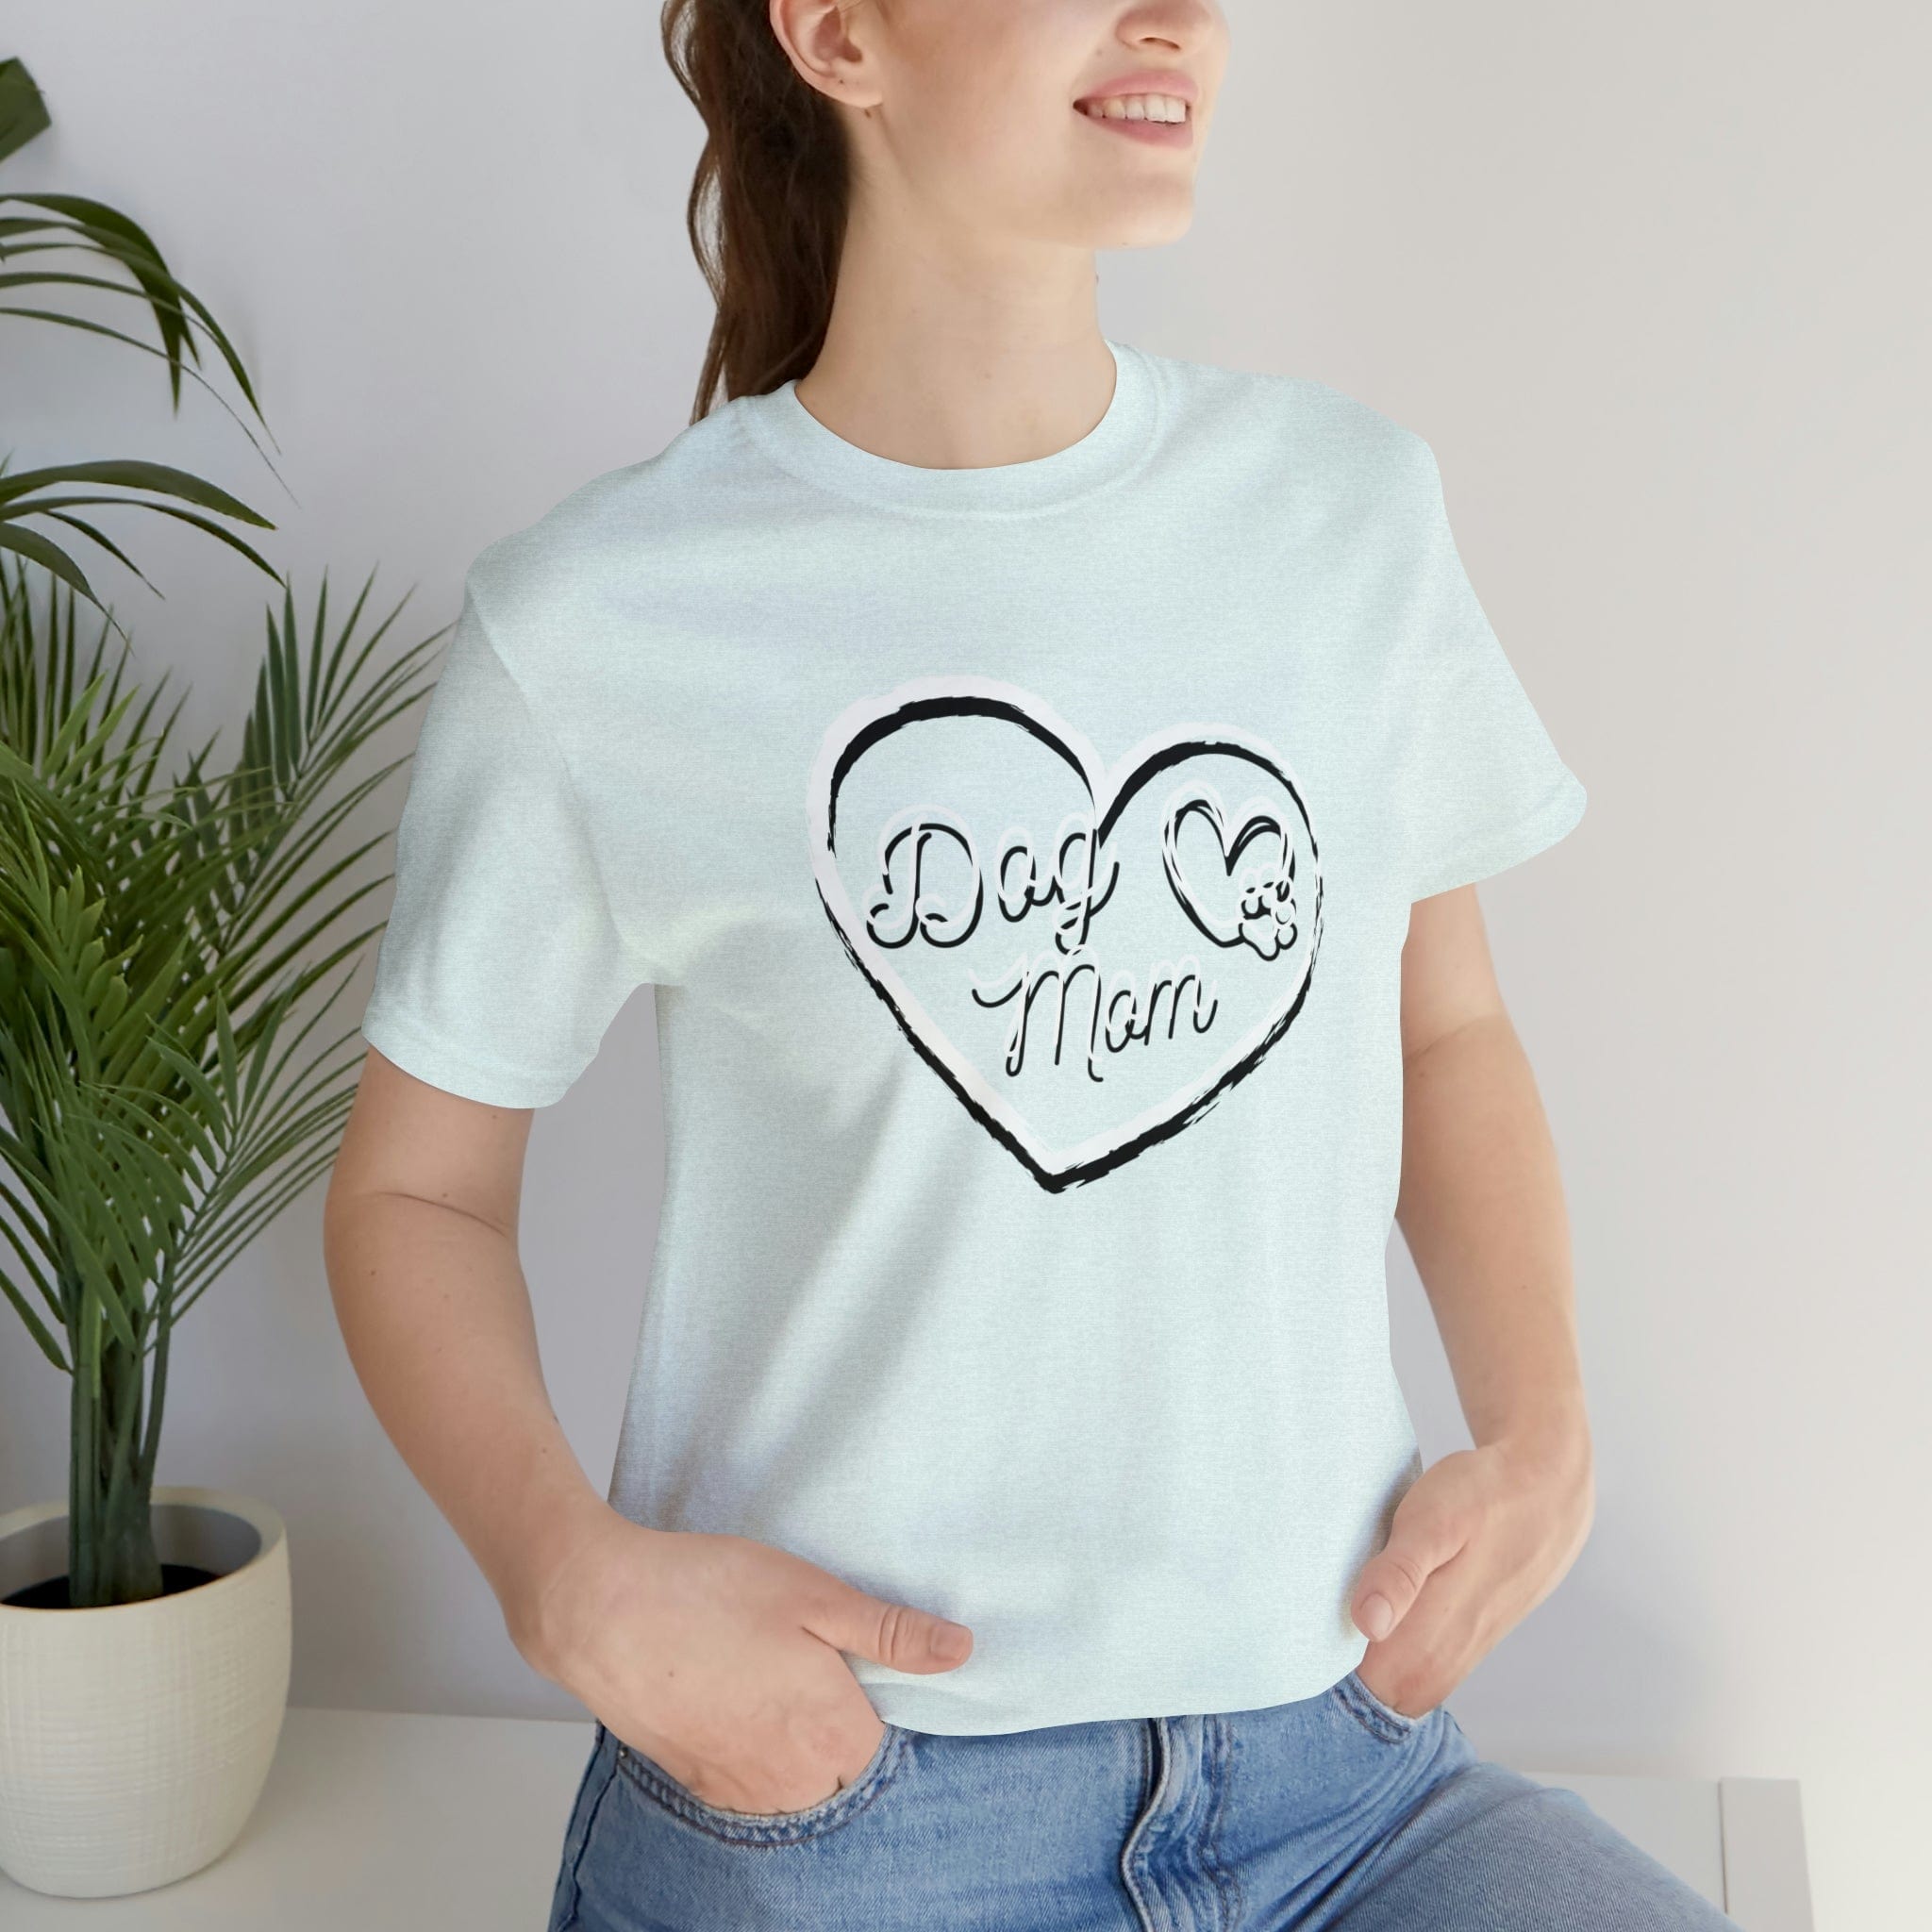 Printify T-Shirt Dog Mom - Unisex Jersey Short Sleeve Tee